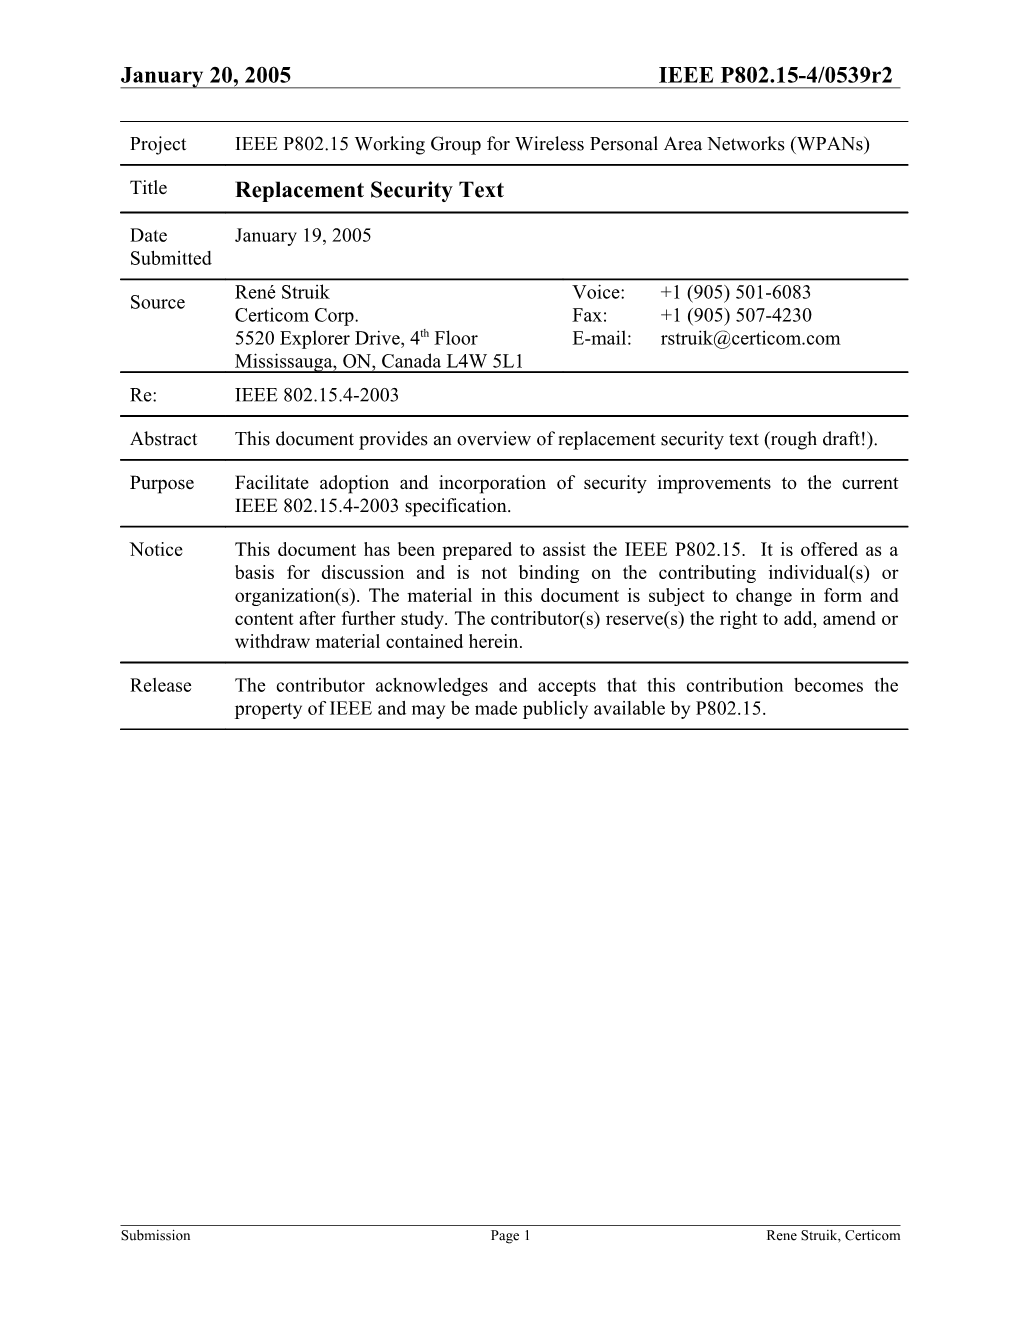 Zigbee Key Establishment Proposal Certicom (Draft R6)